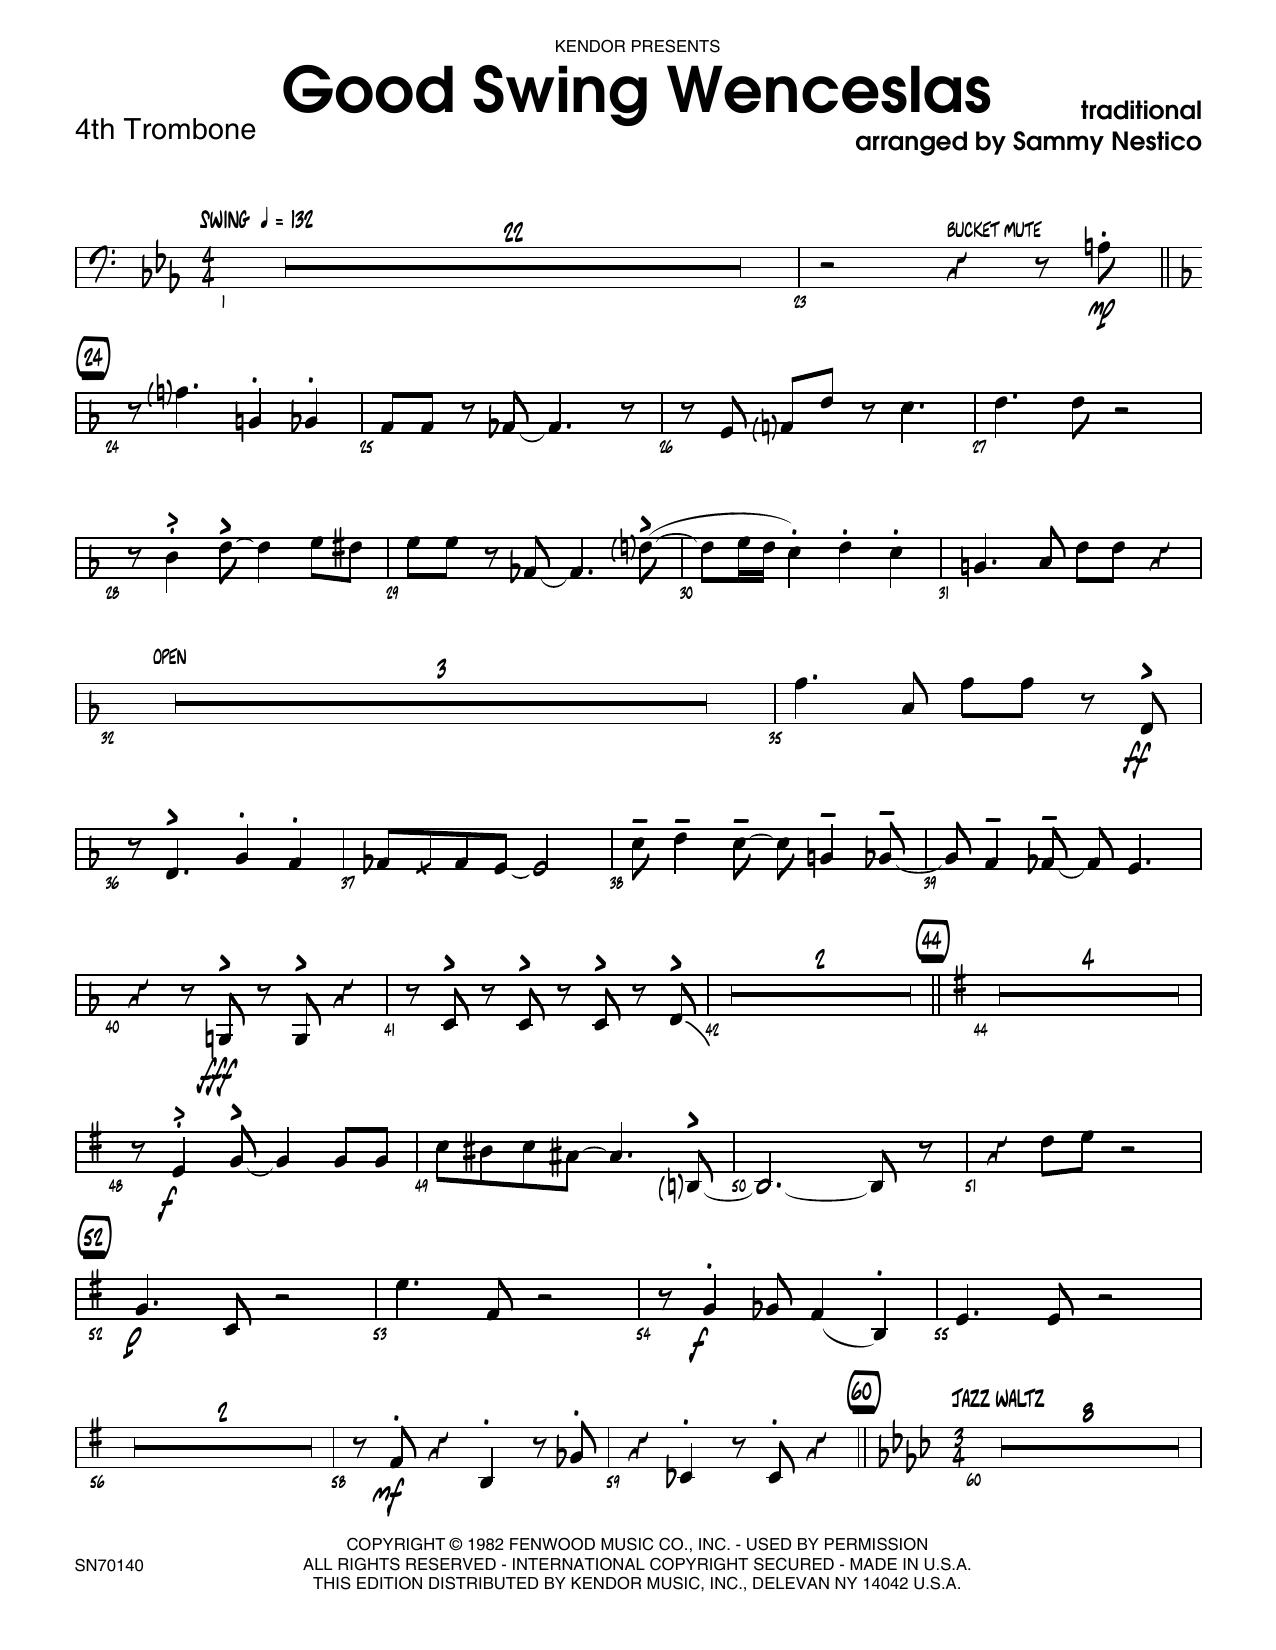 Download Sammy Nestico Good Swing Wenceslas - 4th Trombone Sheet Music